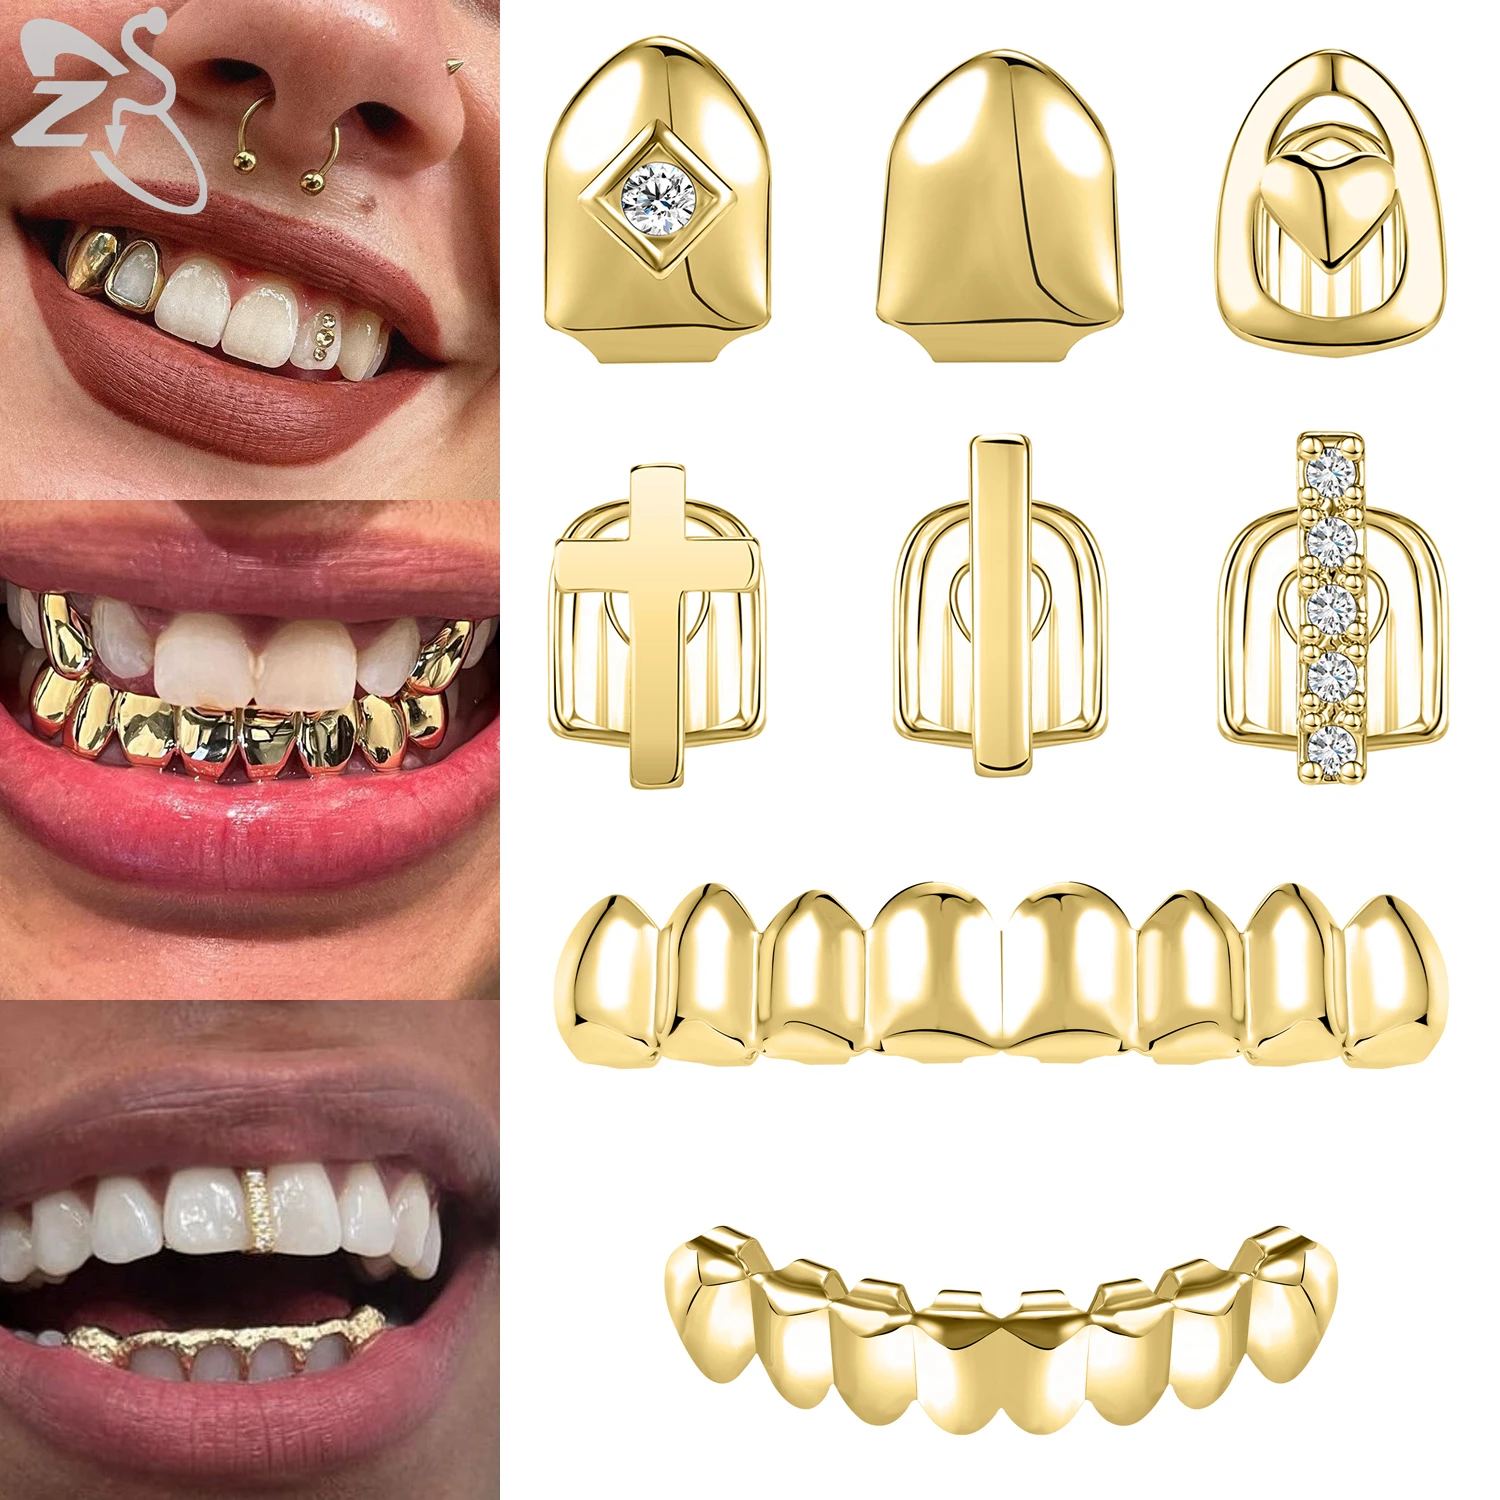 ZS 1-2 Pieces Hip Hop 18K Gold Plated Grillz Teeth Shiny CZ Crystal Cross Gap Grillz High Polish Finish Top & Bottom Tooth Cap